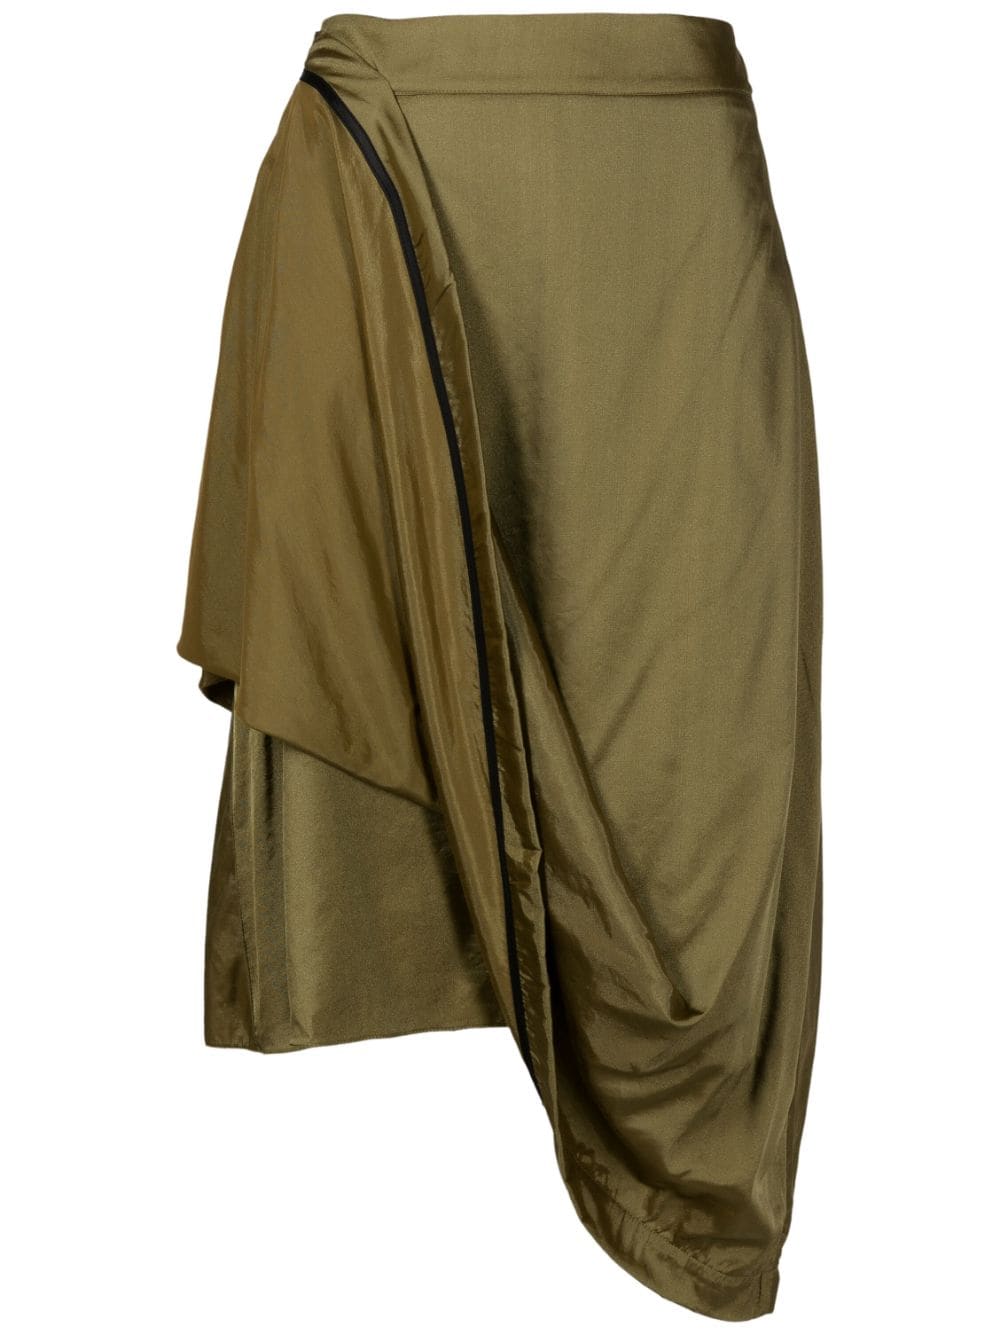 Uma | Raquel Davidowicz high-waisted draped midi skirt - Green von Uma | Raquel Davidowicz